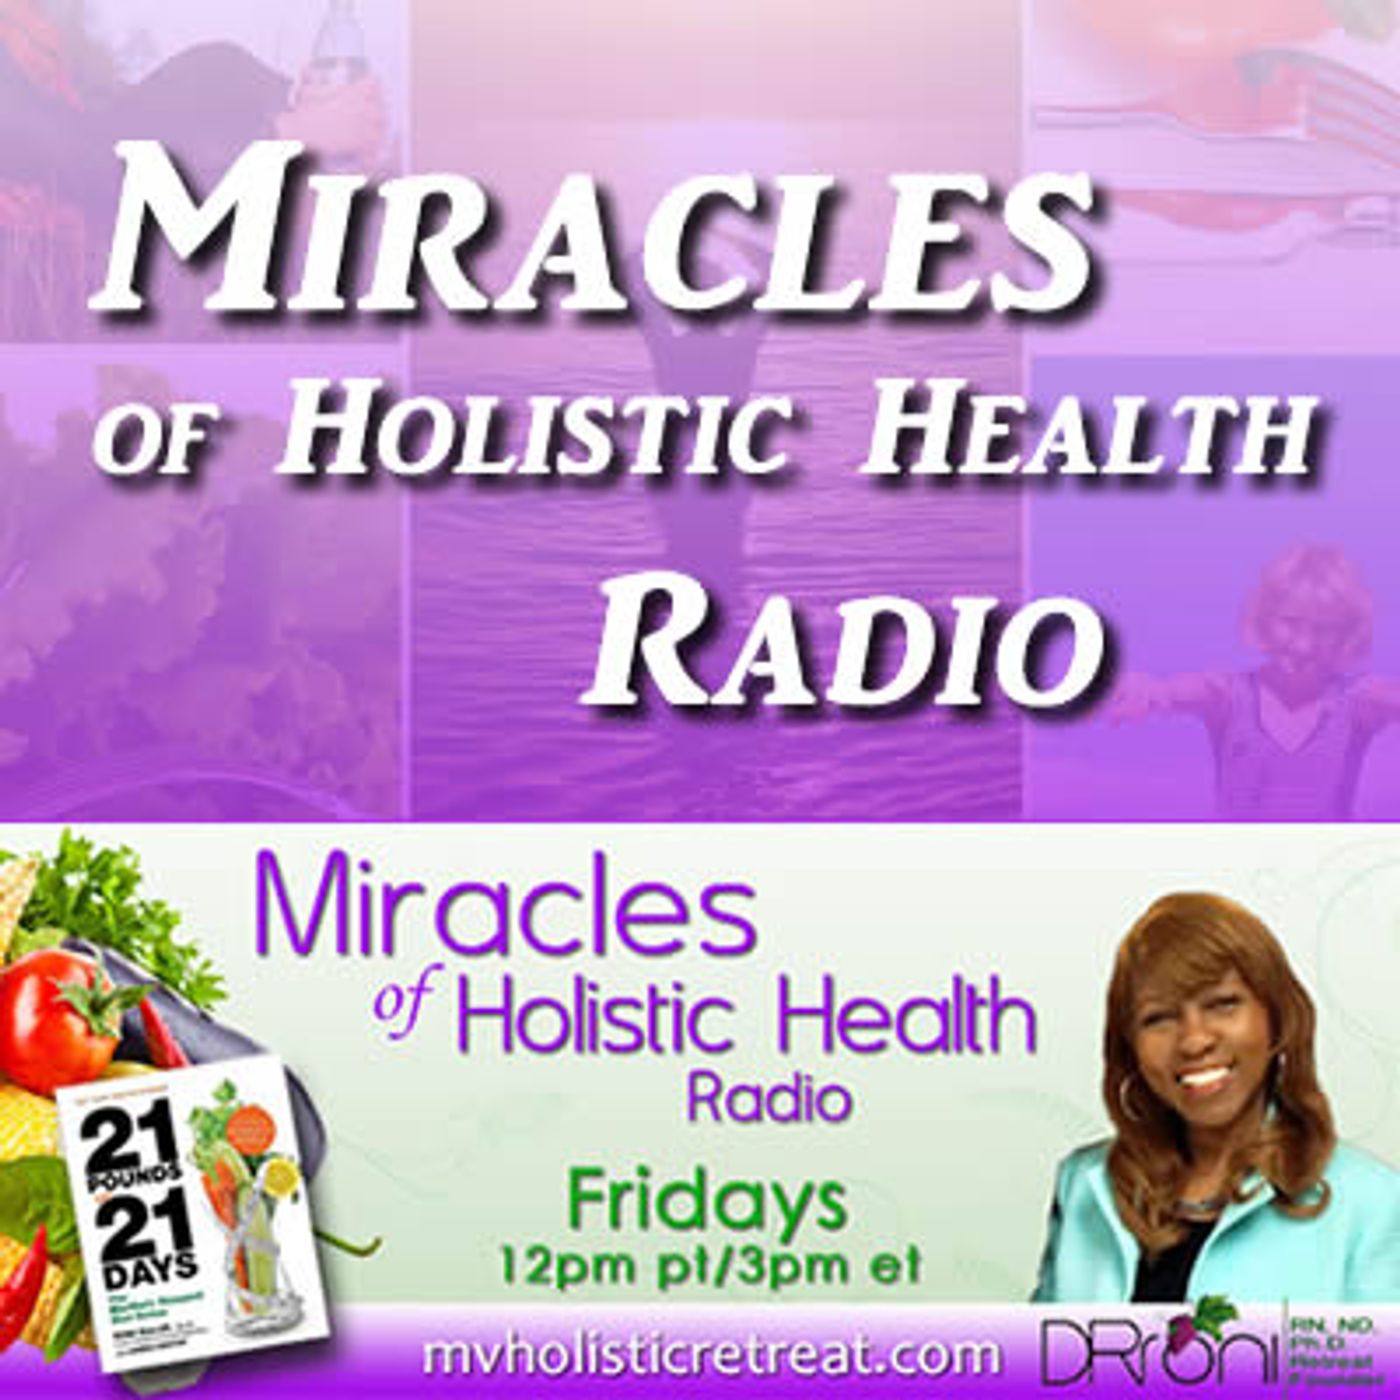 Miracles of Holistic Health Radio